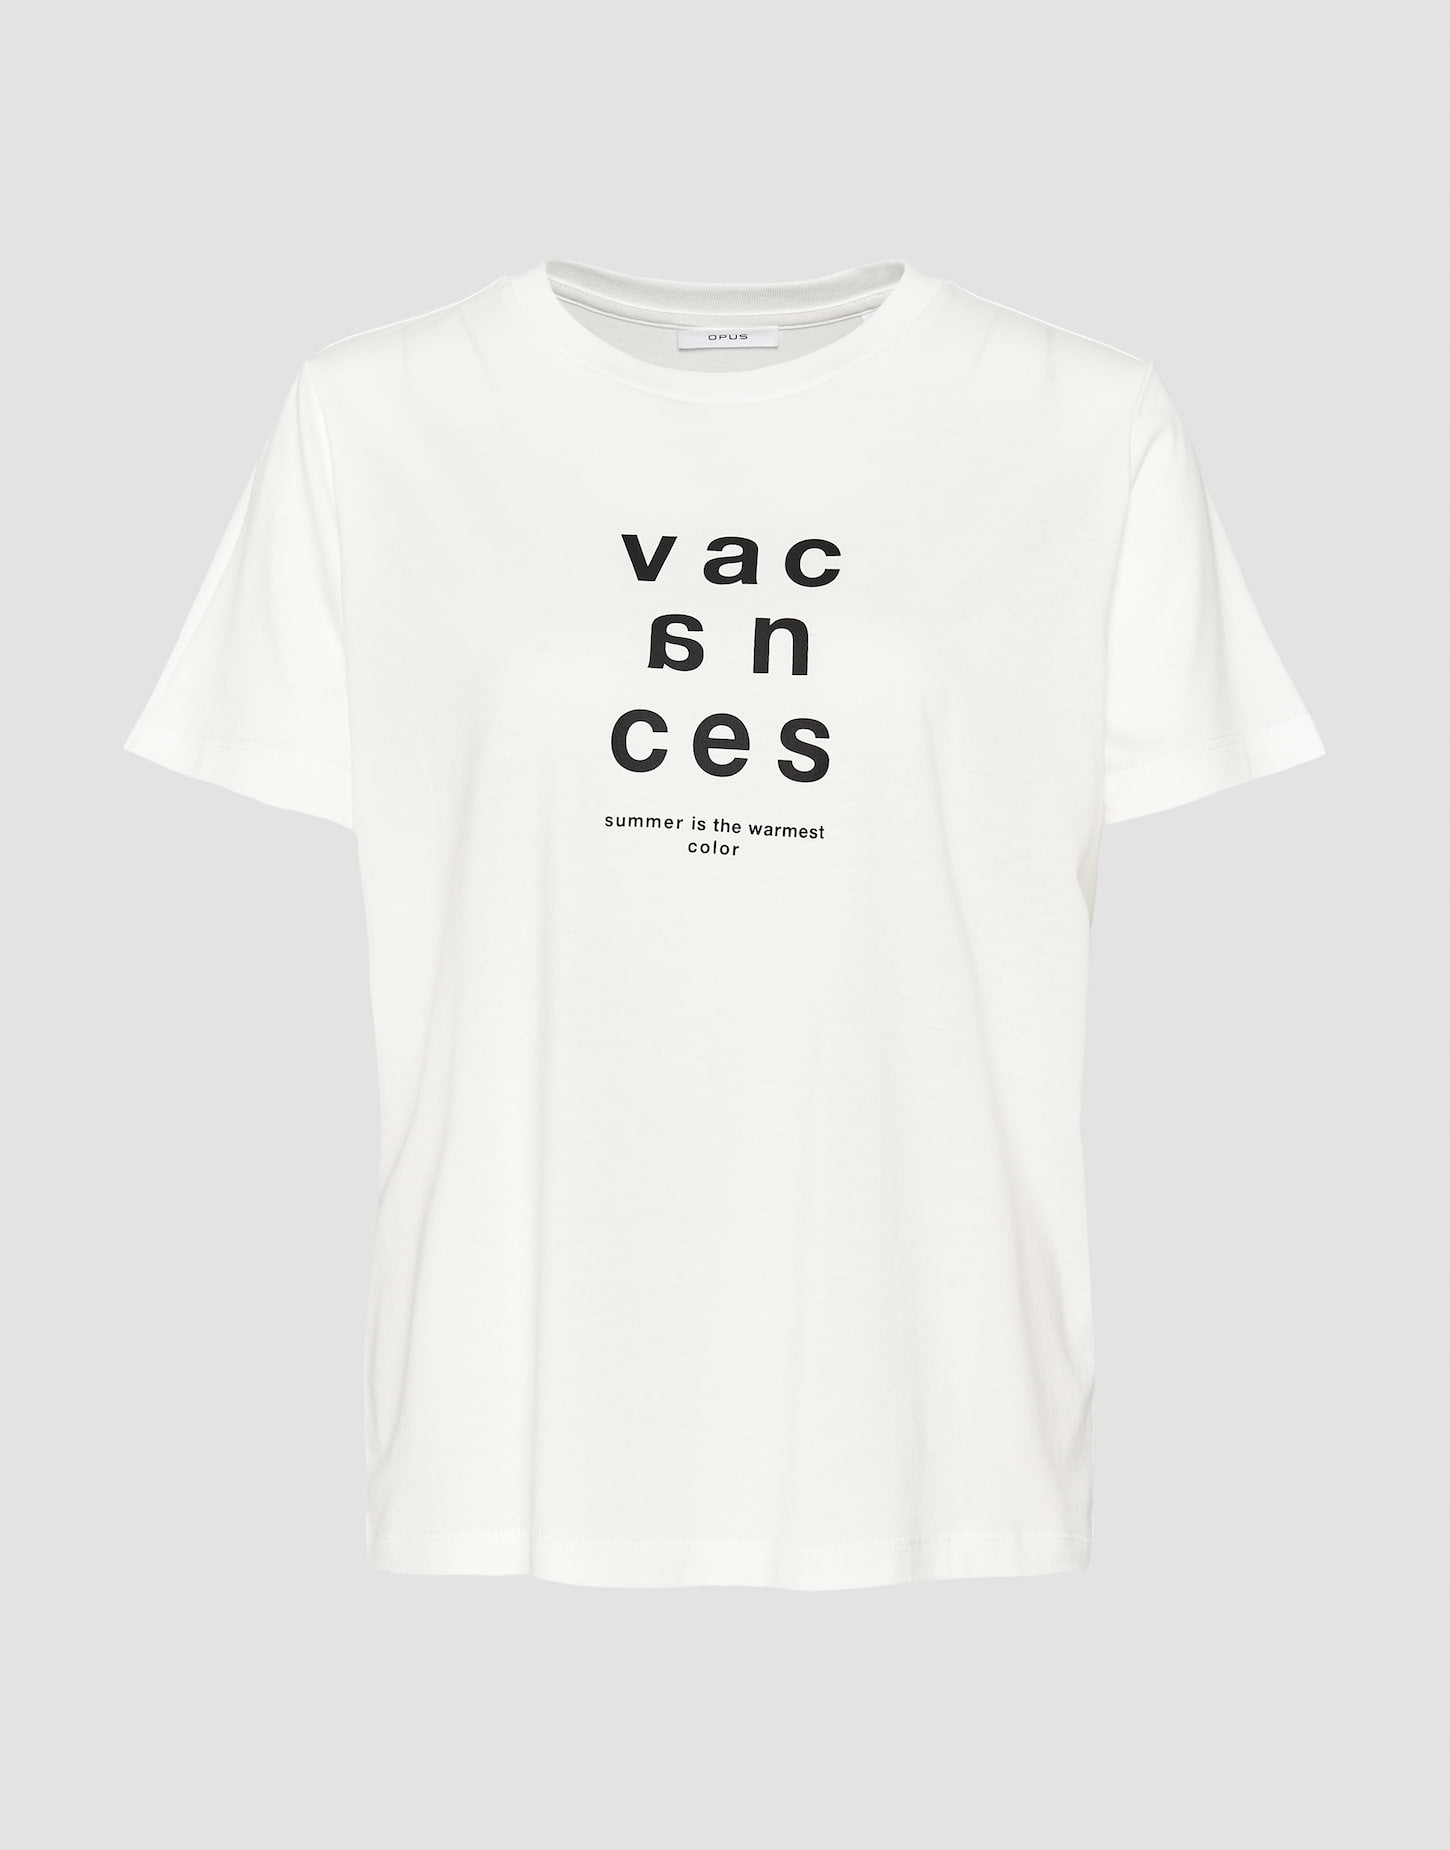 OPUS Sacanza – Print-Shirt invito